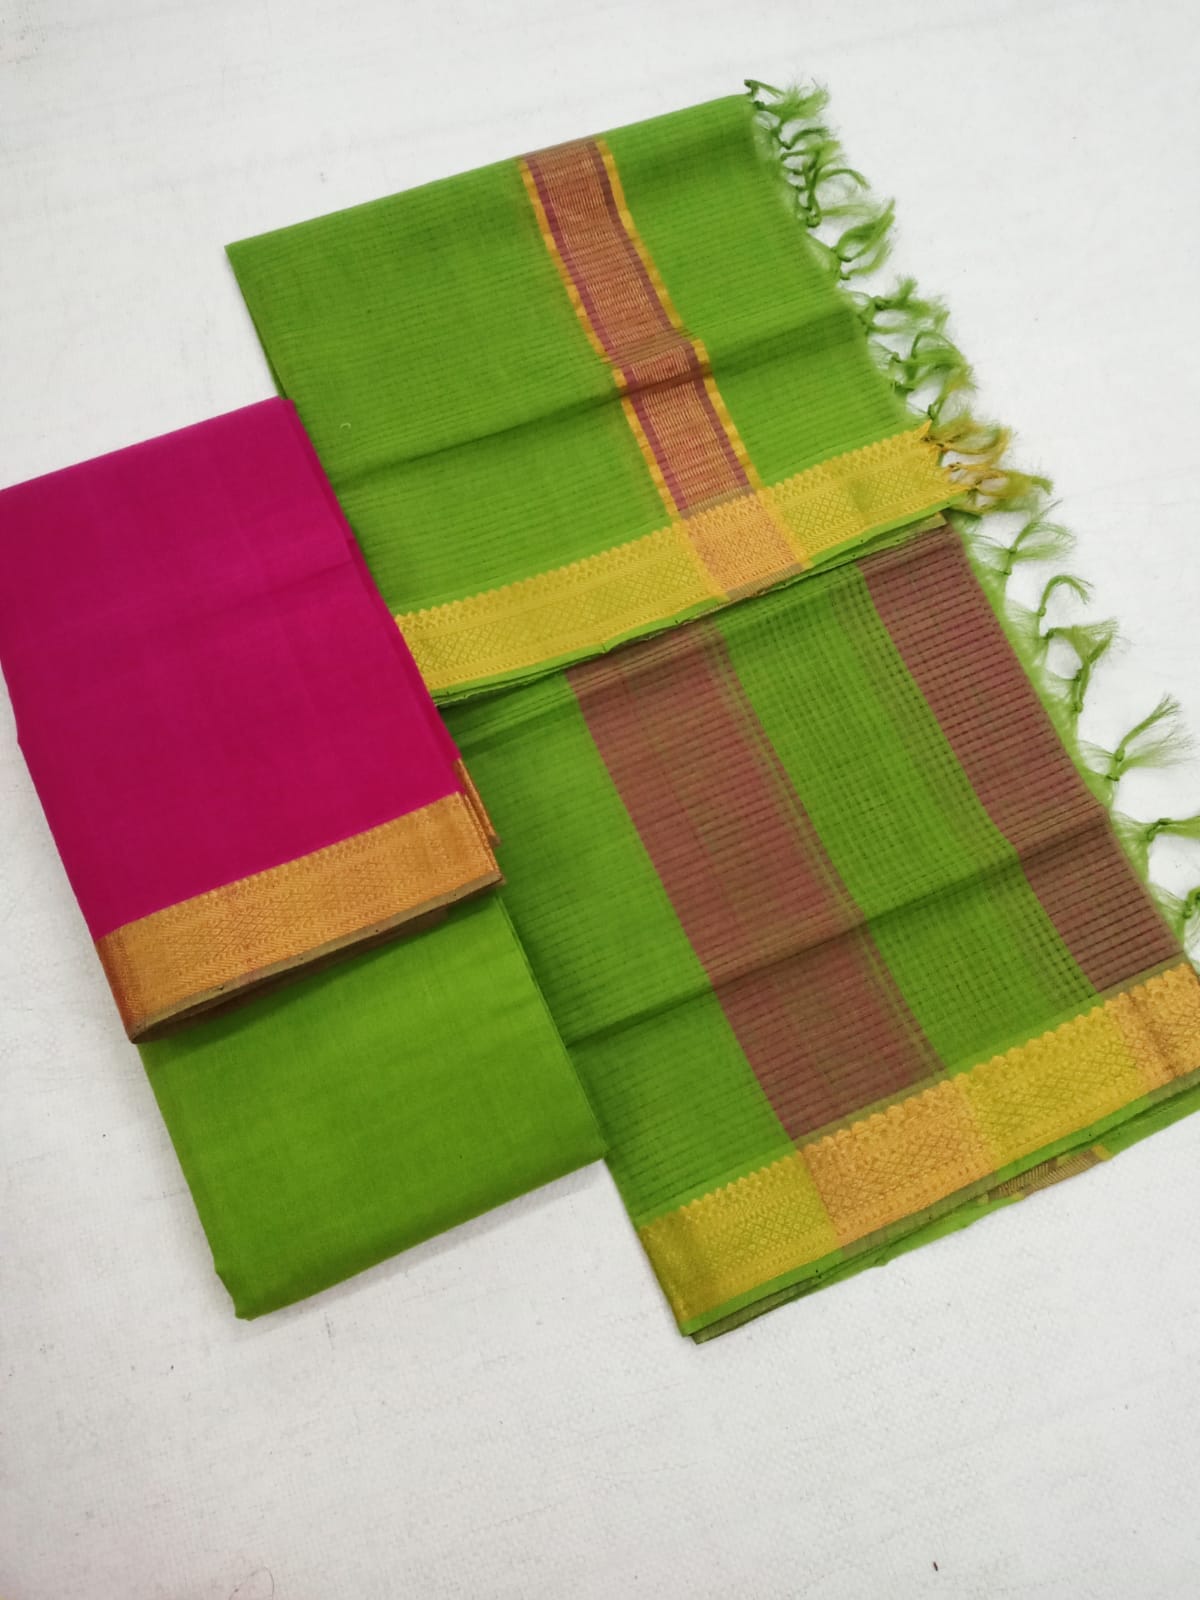 iTokri.com - ✿ Godavari Handloom Cotton Dress Material Sets ✿ Check  Collection - http://www.itokri.com/collections/2016-67-5-godavari-handloom- cotton-dress-material-set | Facebook